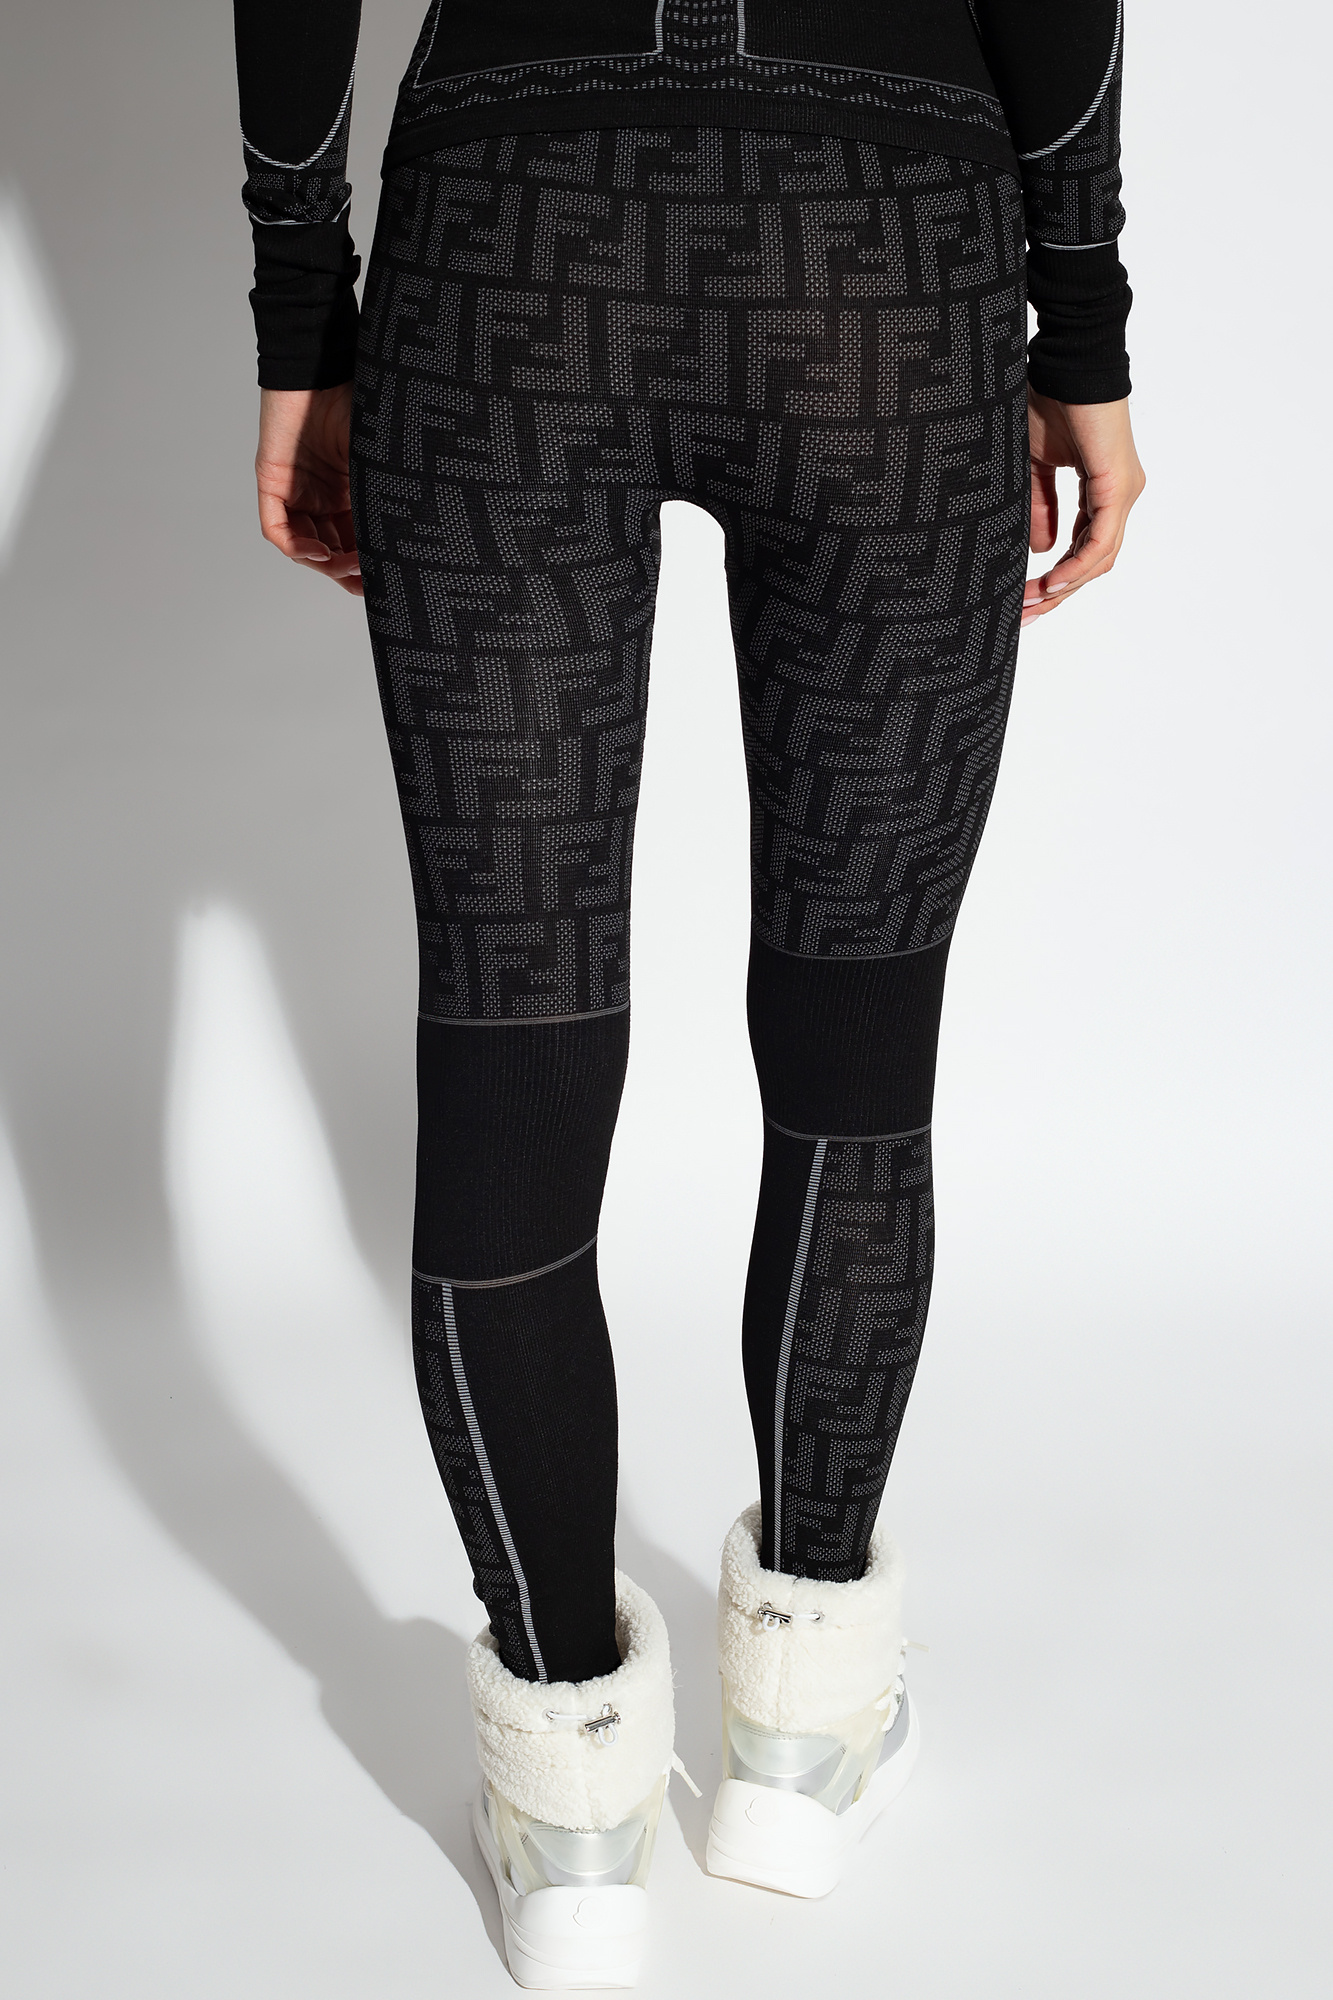 GenesinlifeShops Australia - Black 'Skiwear' line leggings Fendi - Fendi  2Jours Tote in Cow Print Calf Hair